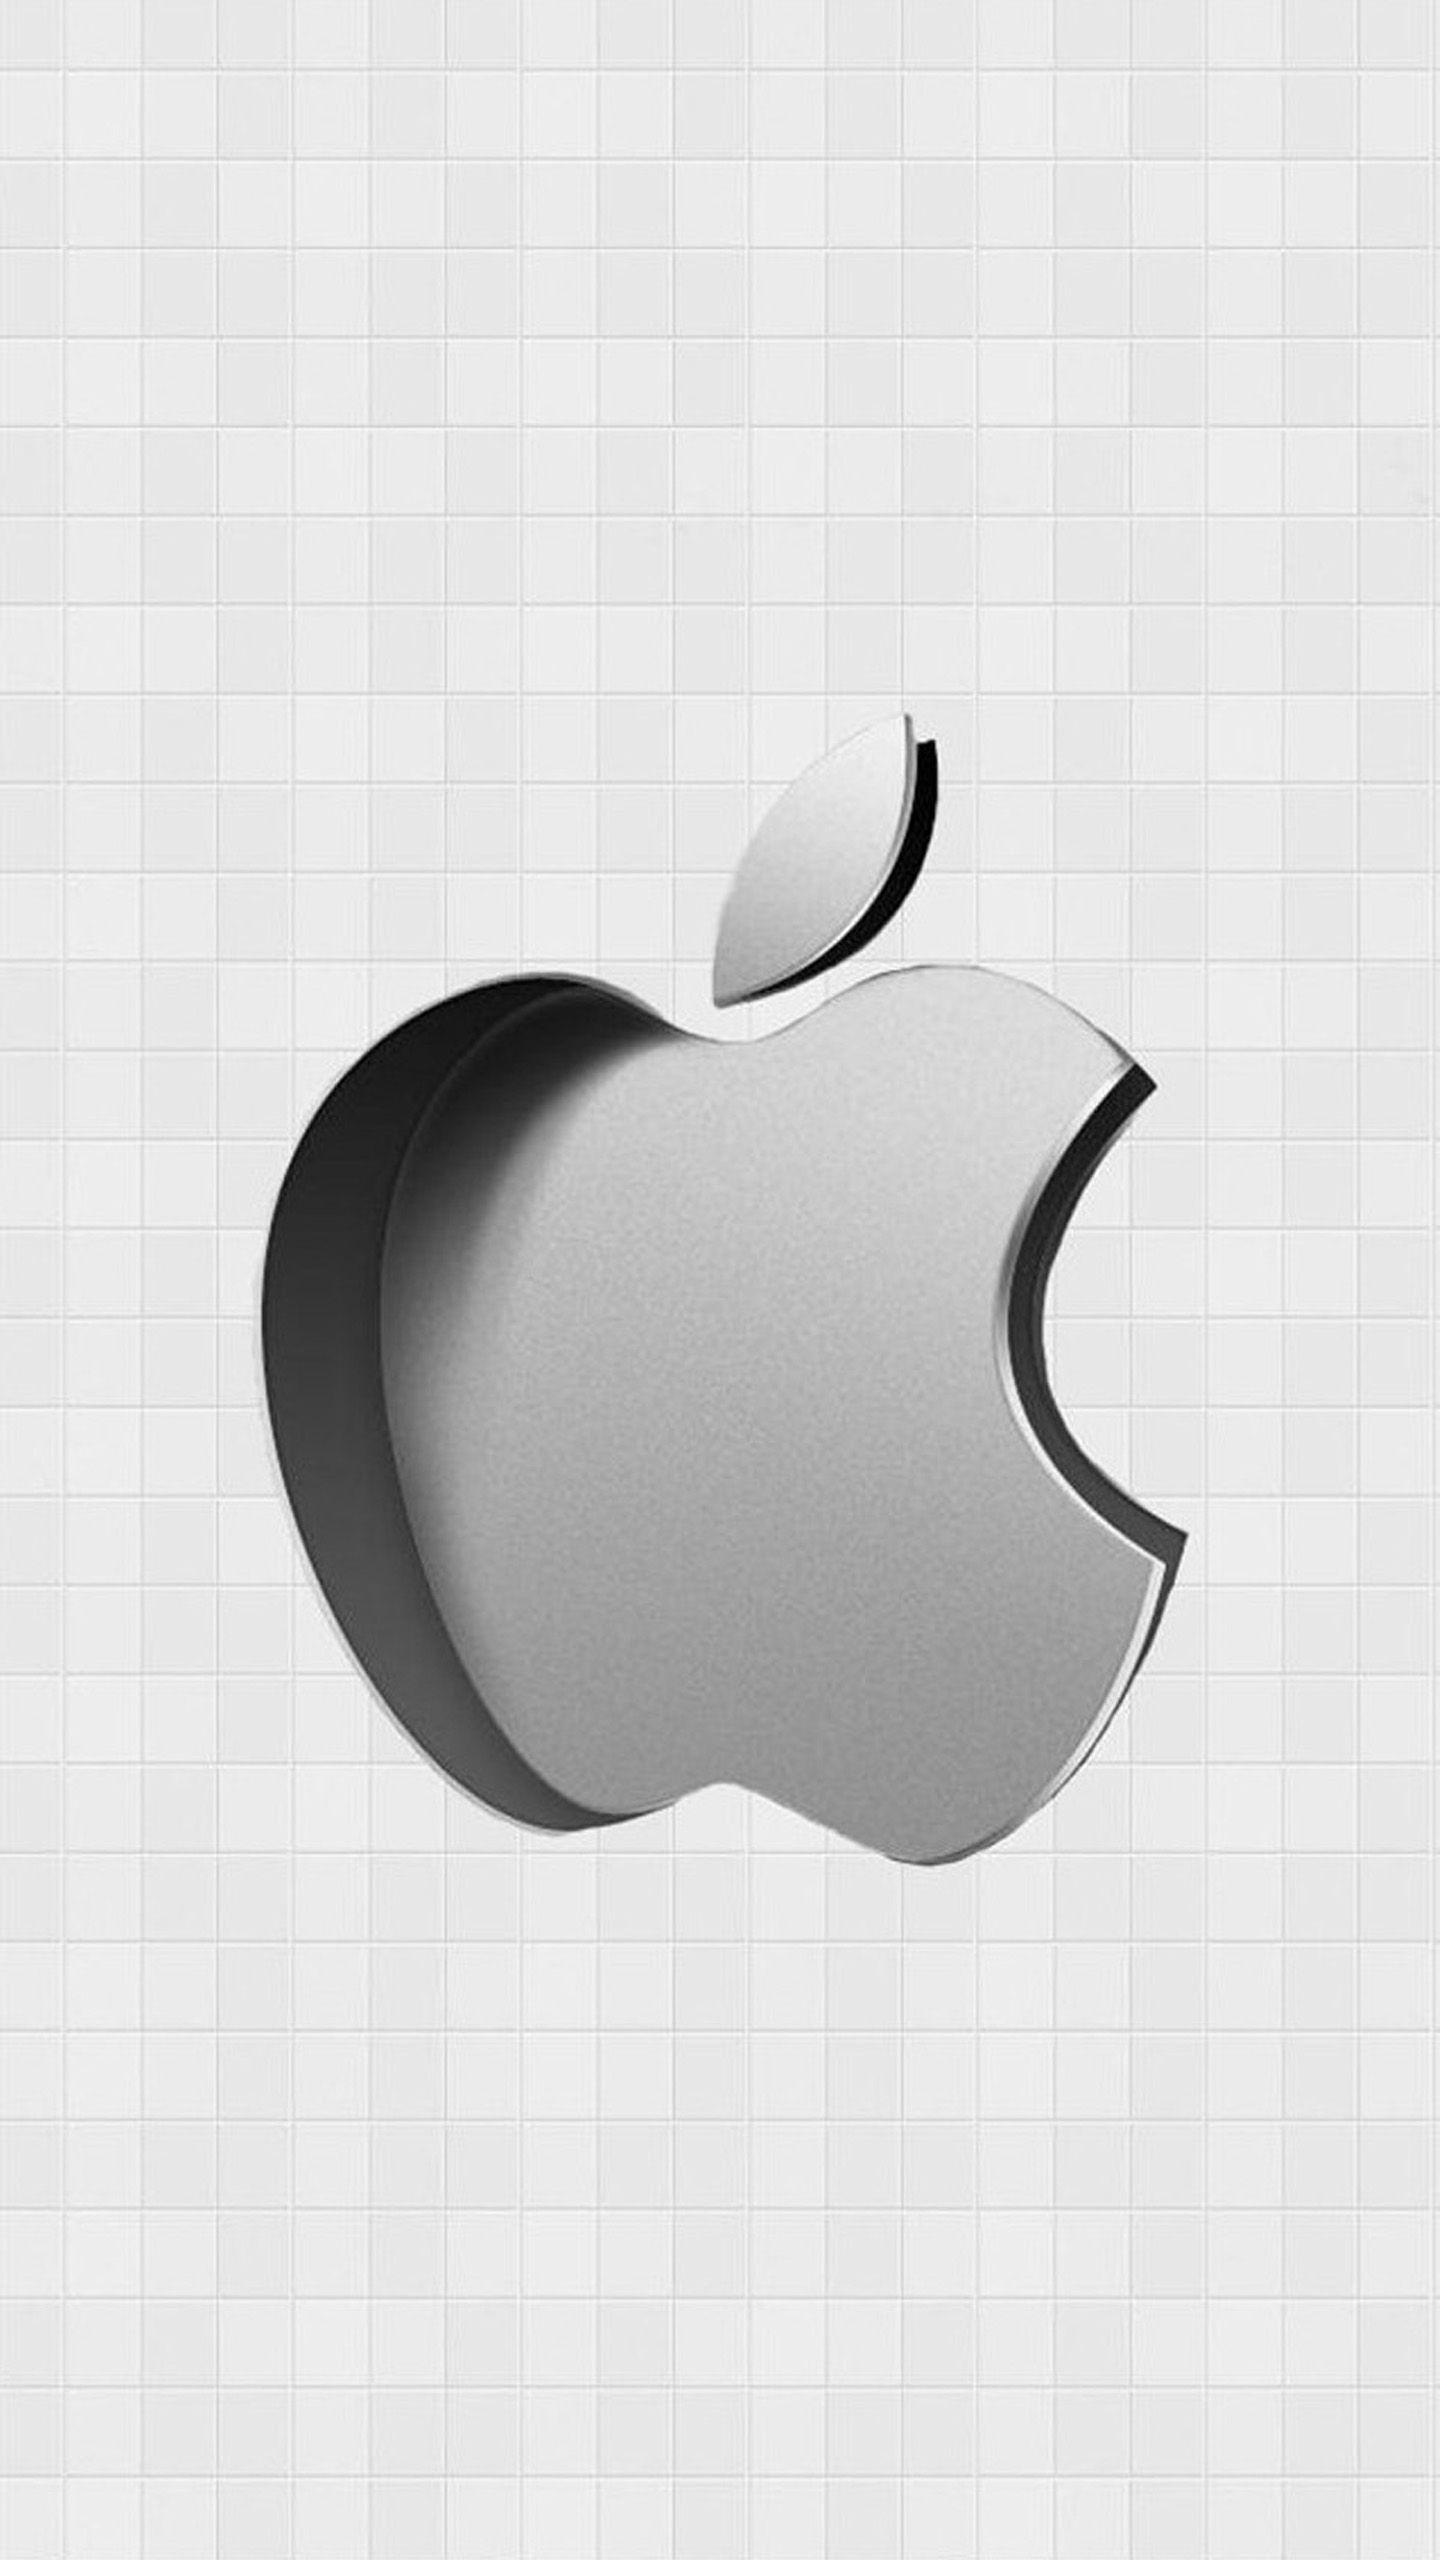 Silver Apple Logo - Silver Apple logo Galaxy S6 Wallpaper. Galaxy S6 Wallpaper